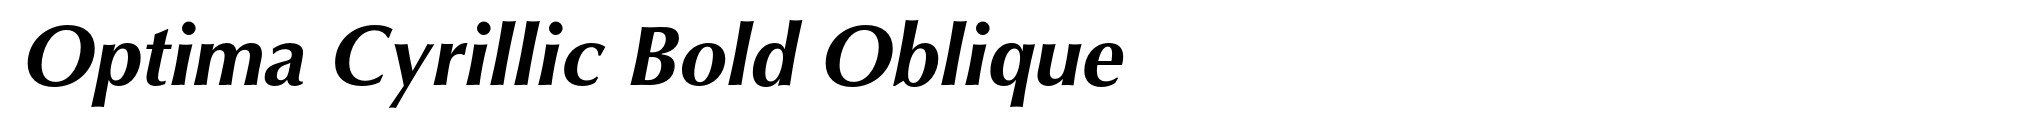 Optima Cyrillic Bold Oblique image